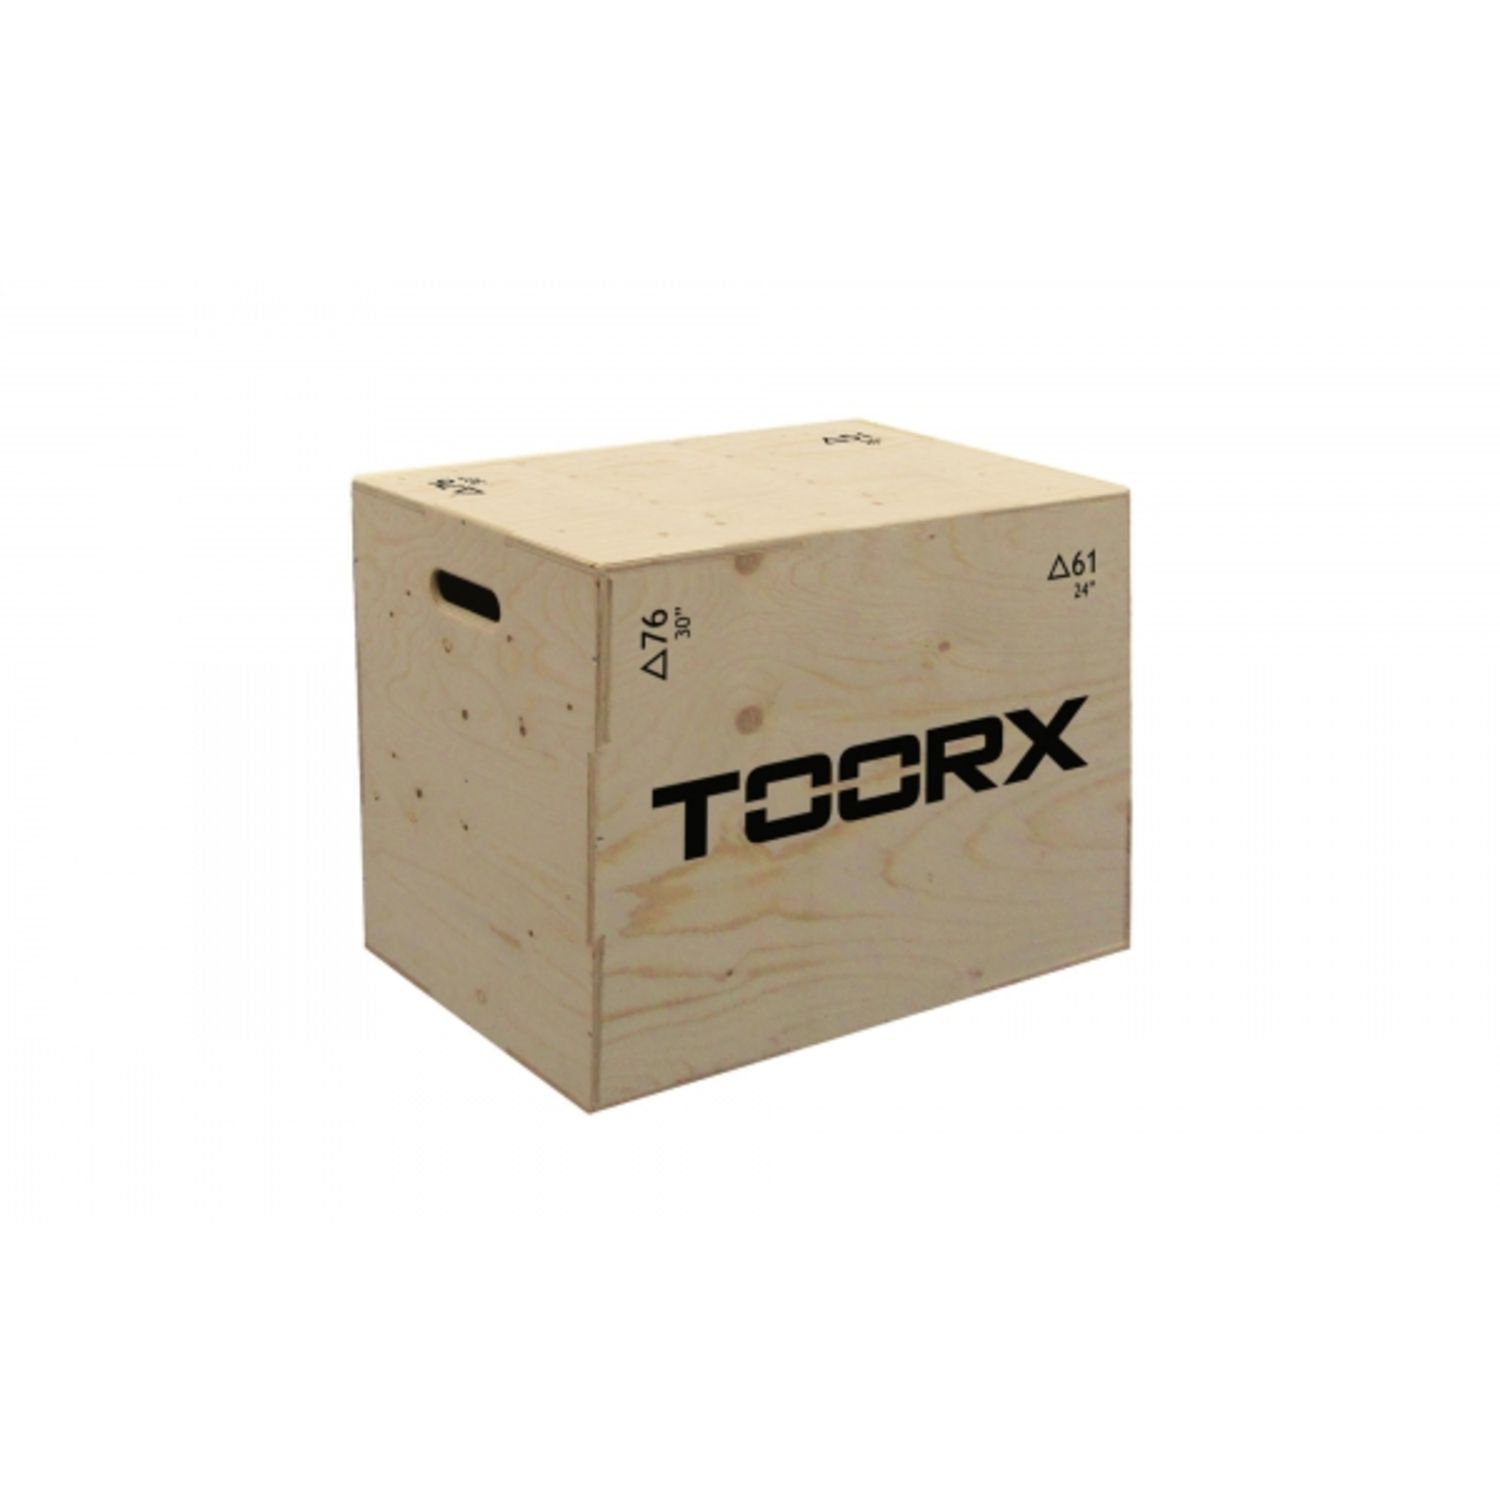 TOORX PLYO BOX 3 IN 1 AHF-140